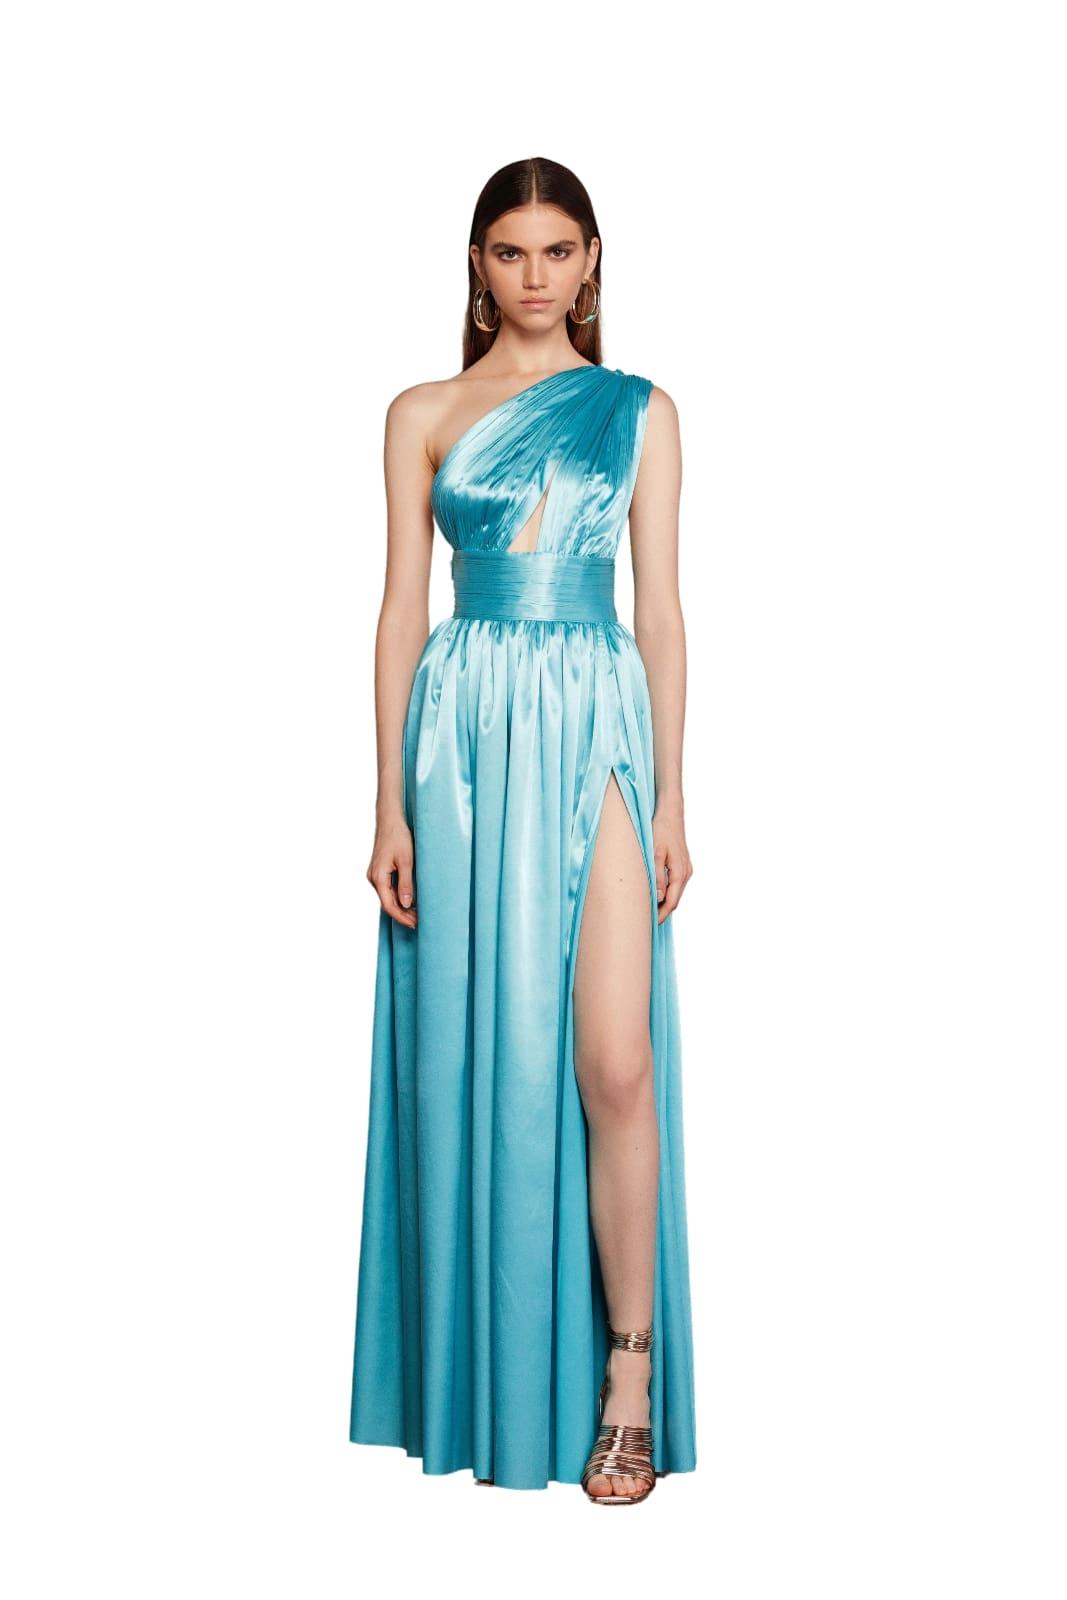 aphrodite-light-blue-gown-01